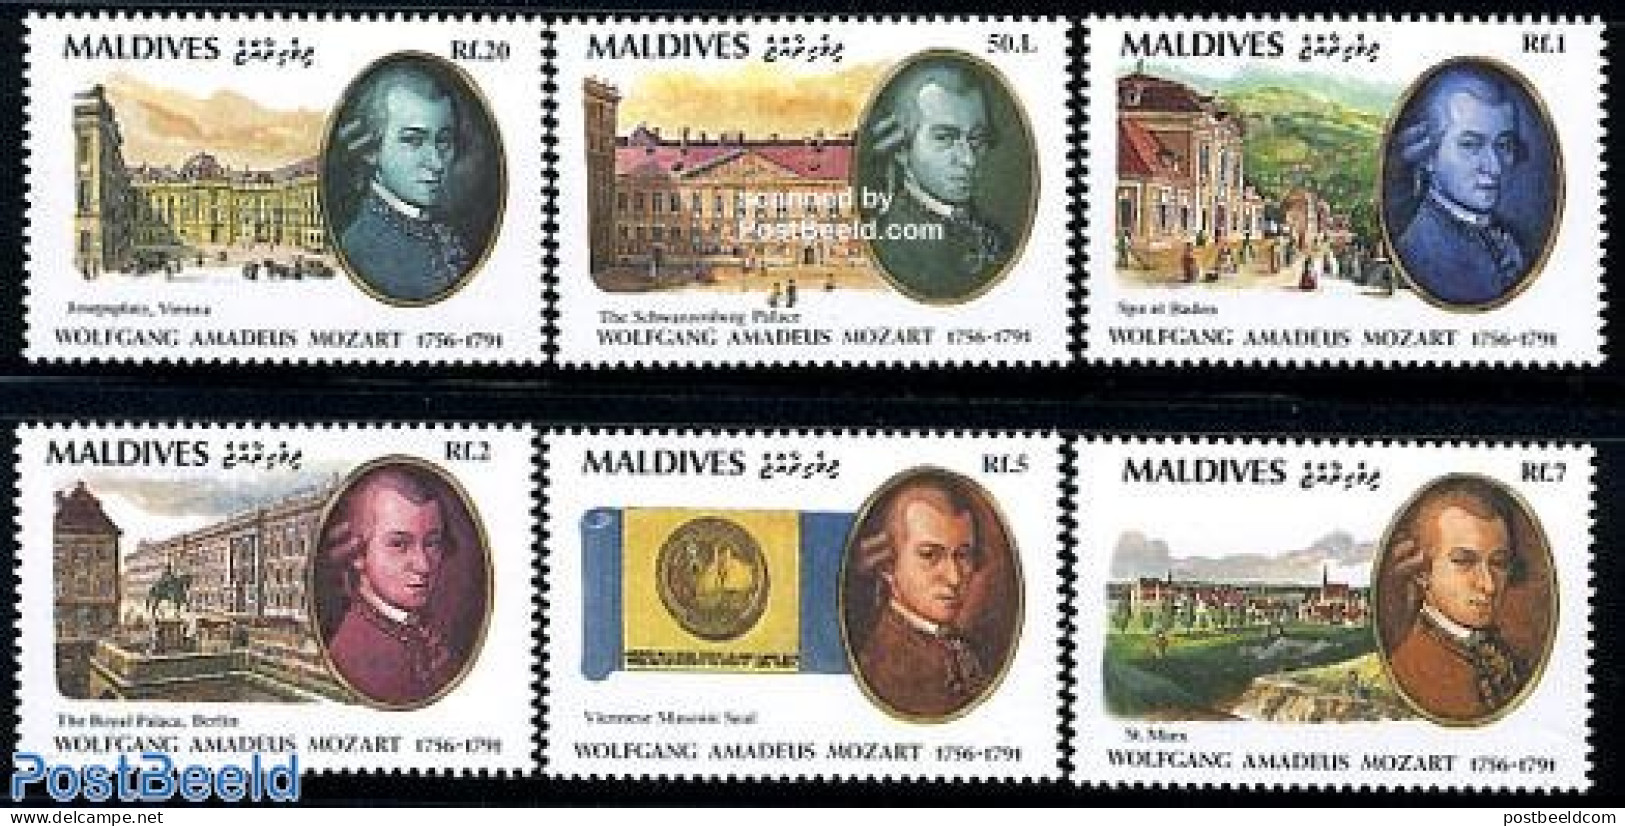 Maldives 1992 W.A. Mozart 6v, Mint NH, Performance Art - Amadeus Mozart - Music - Musique